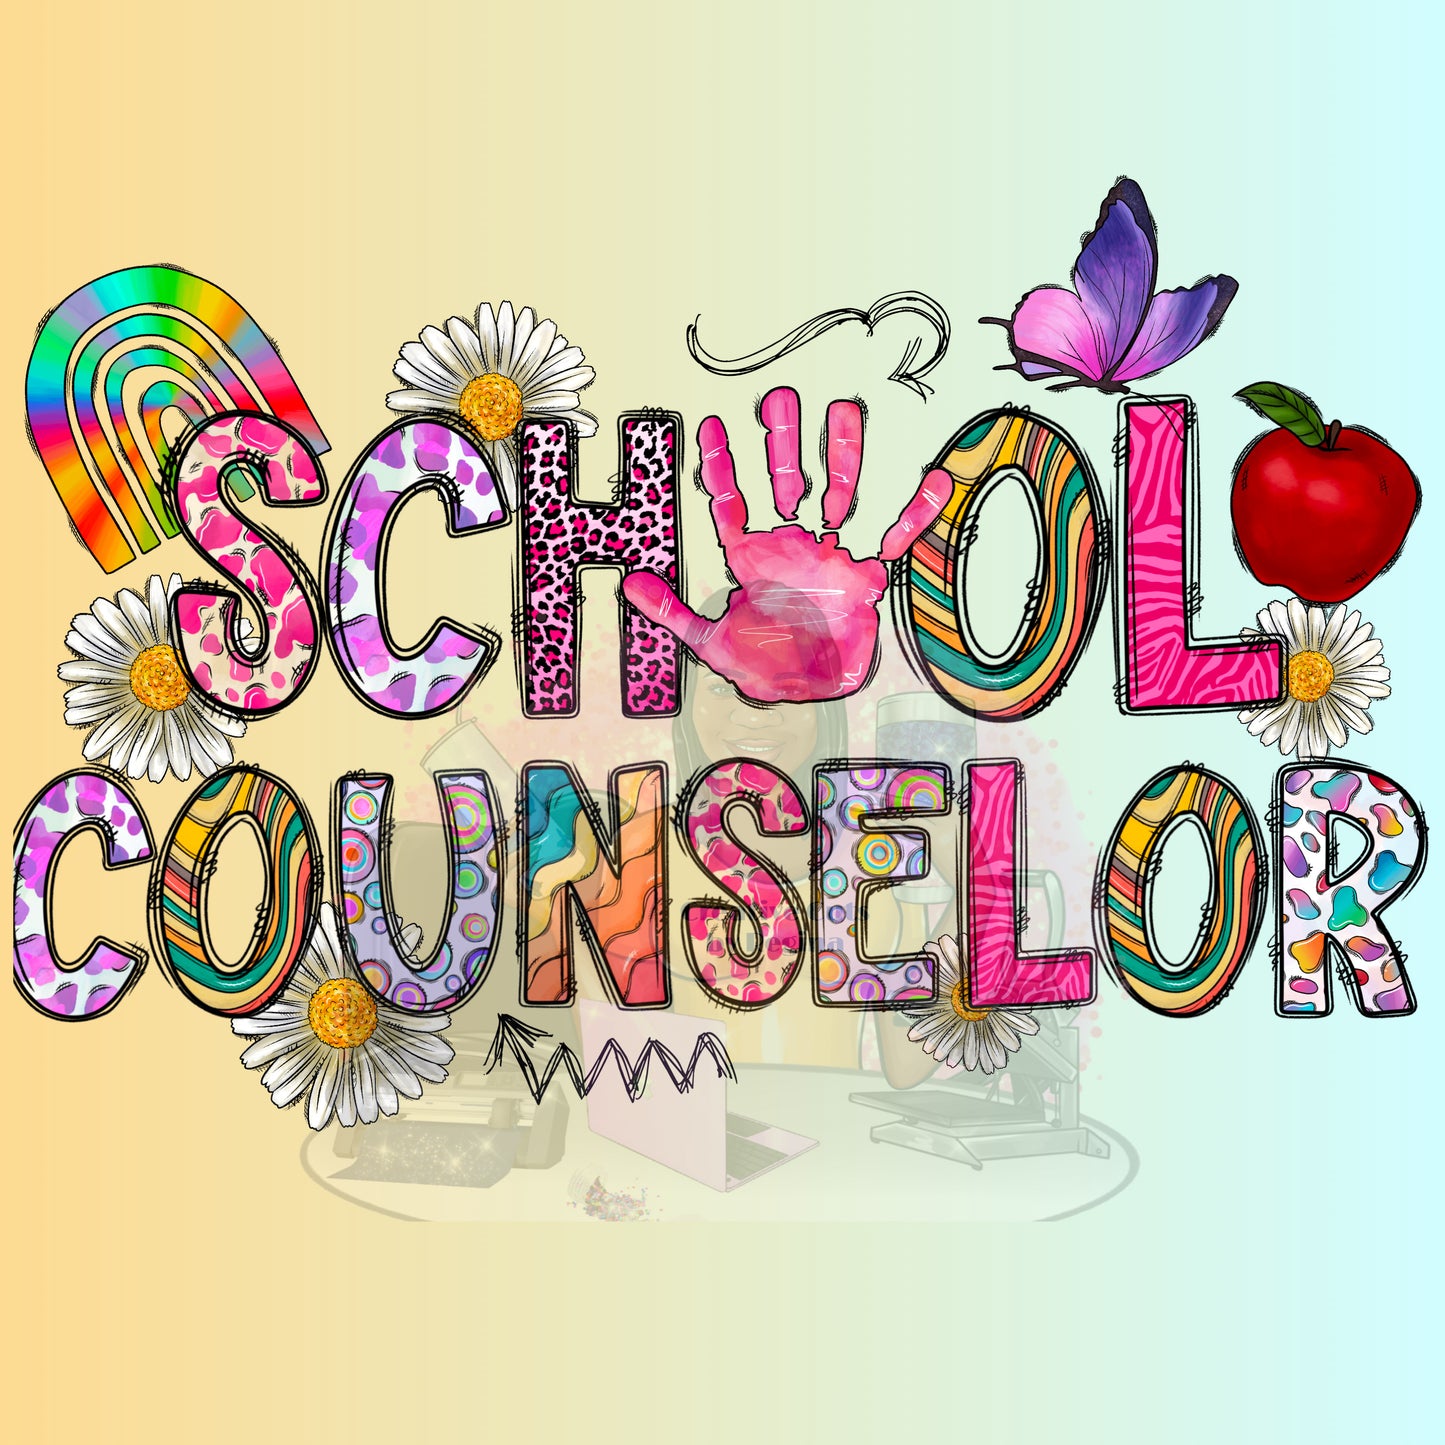 School Counselor